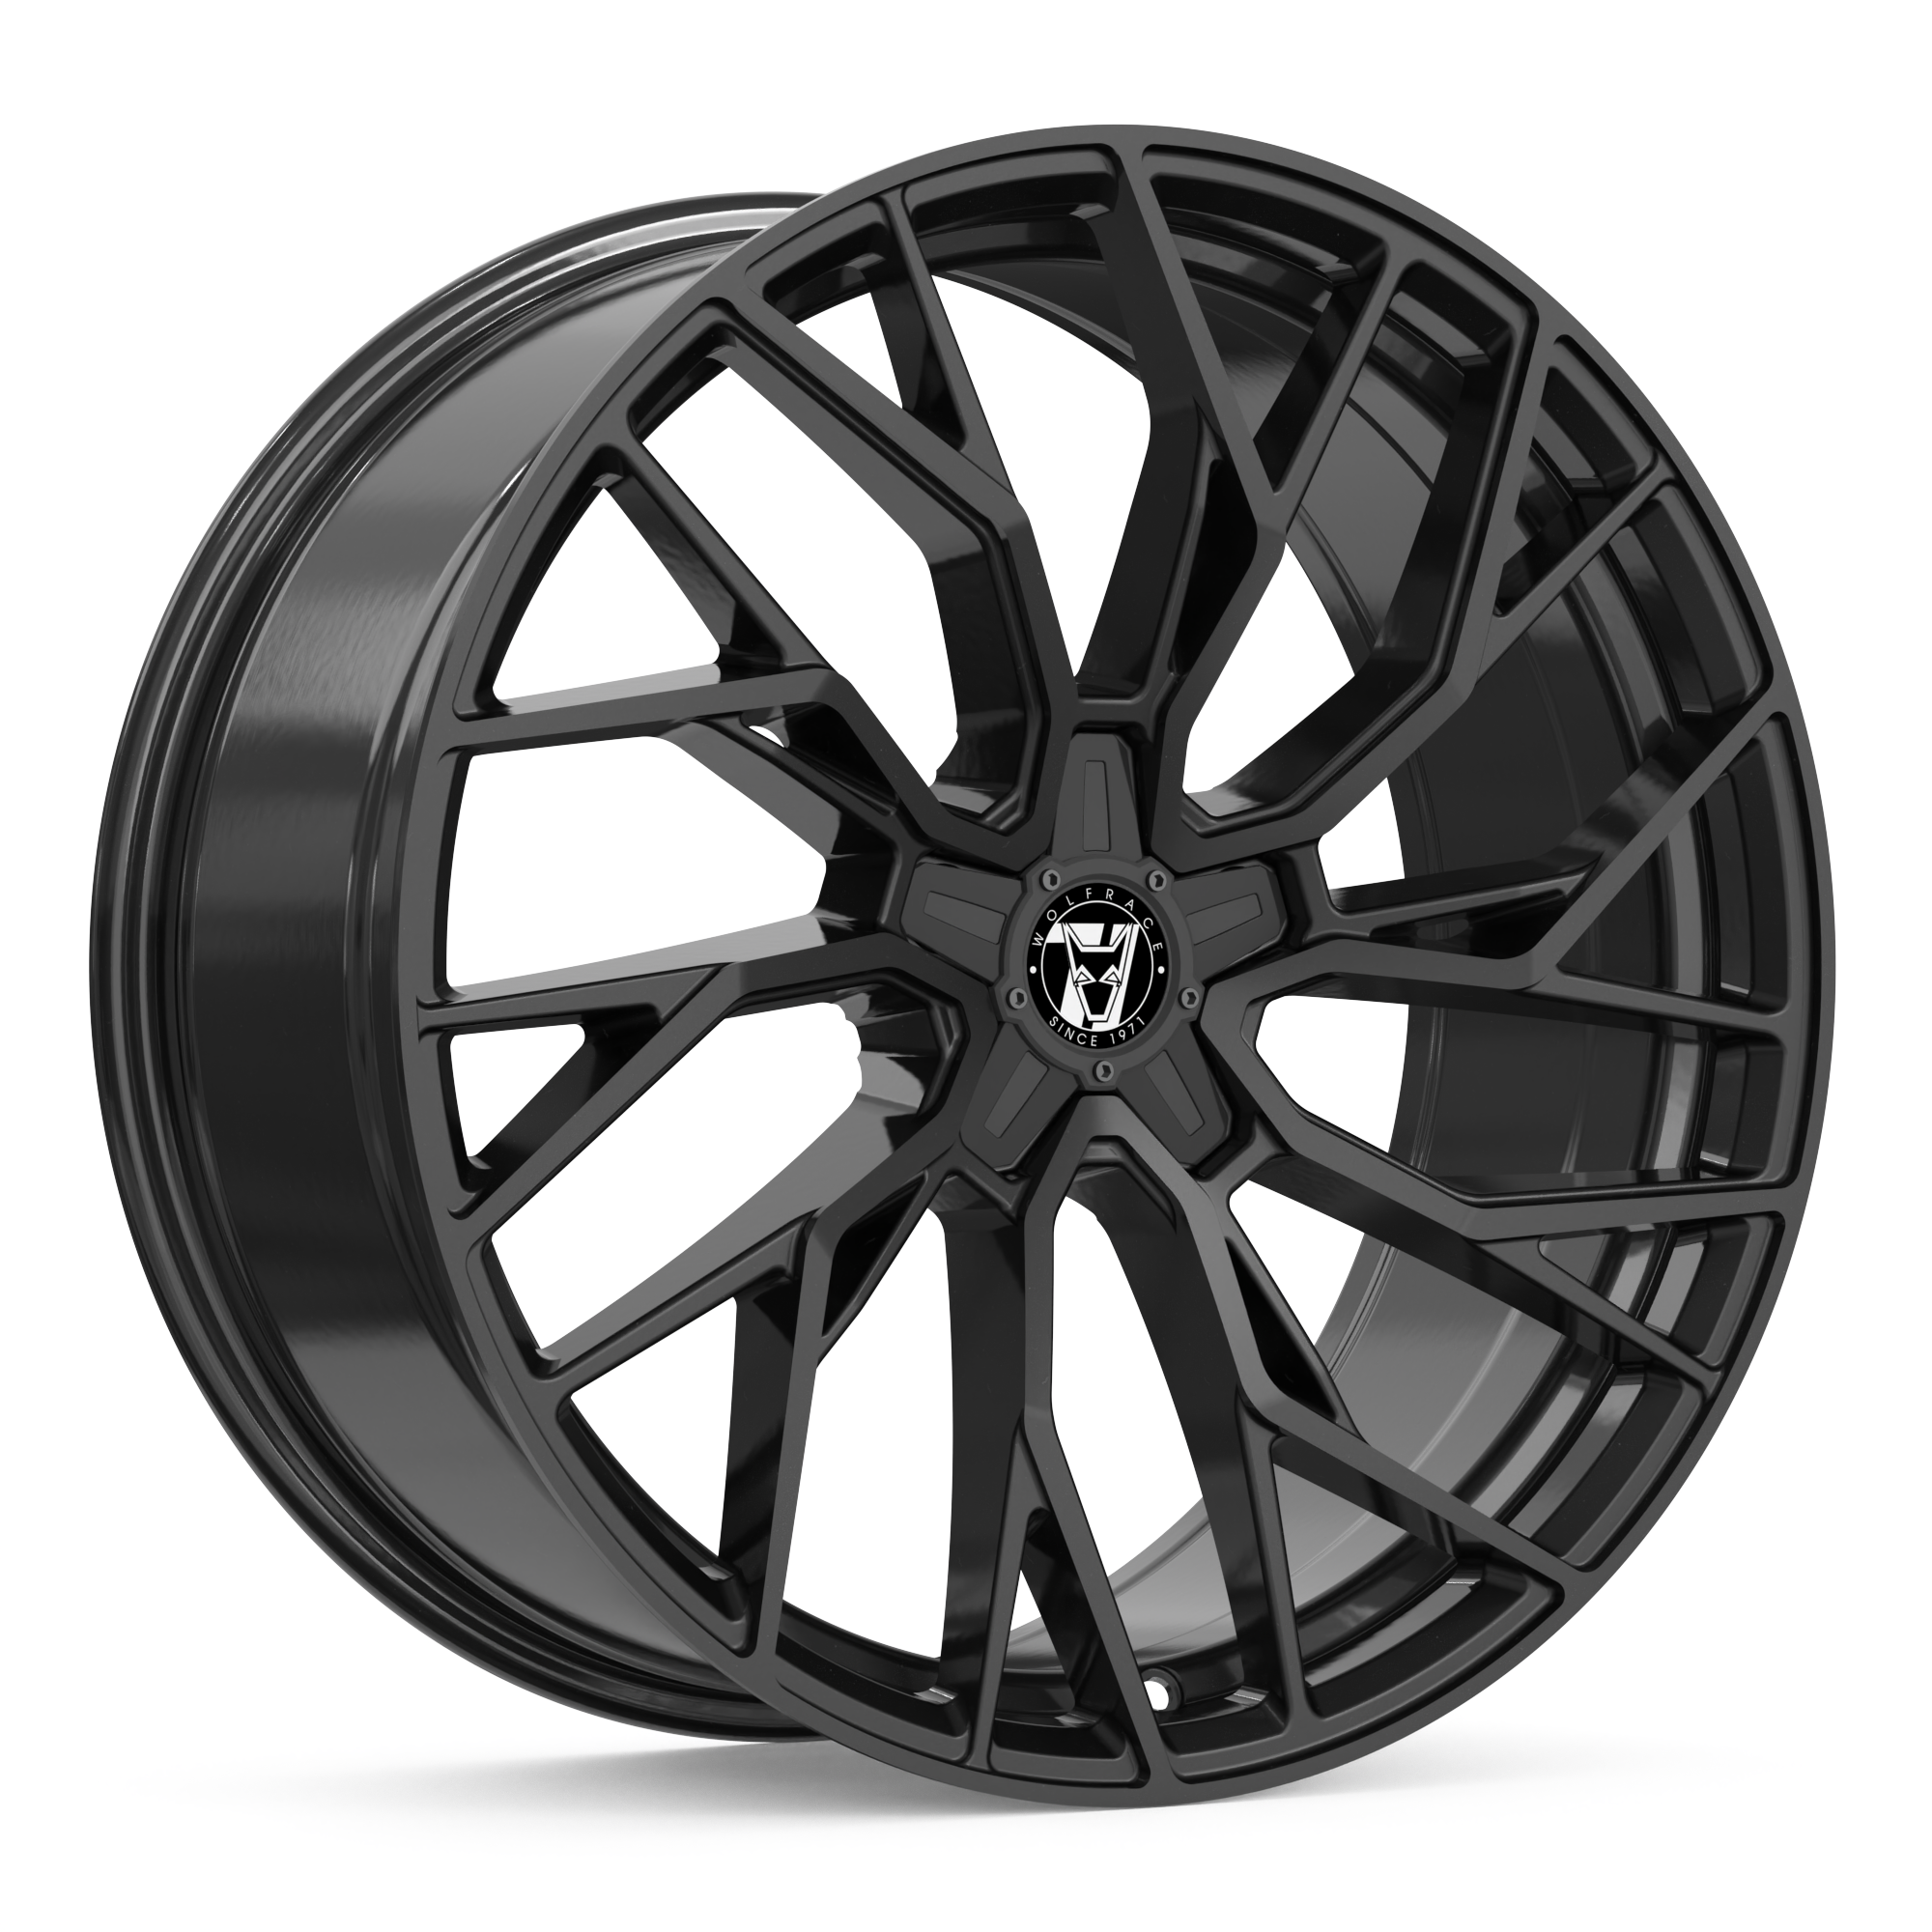 Demon Wheels 71 Voodoo Black Edition [9.5x22] -5x114.3- ET 45